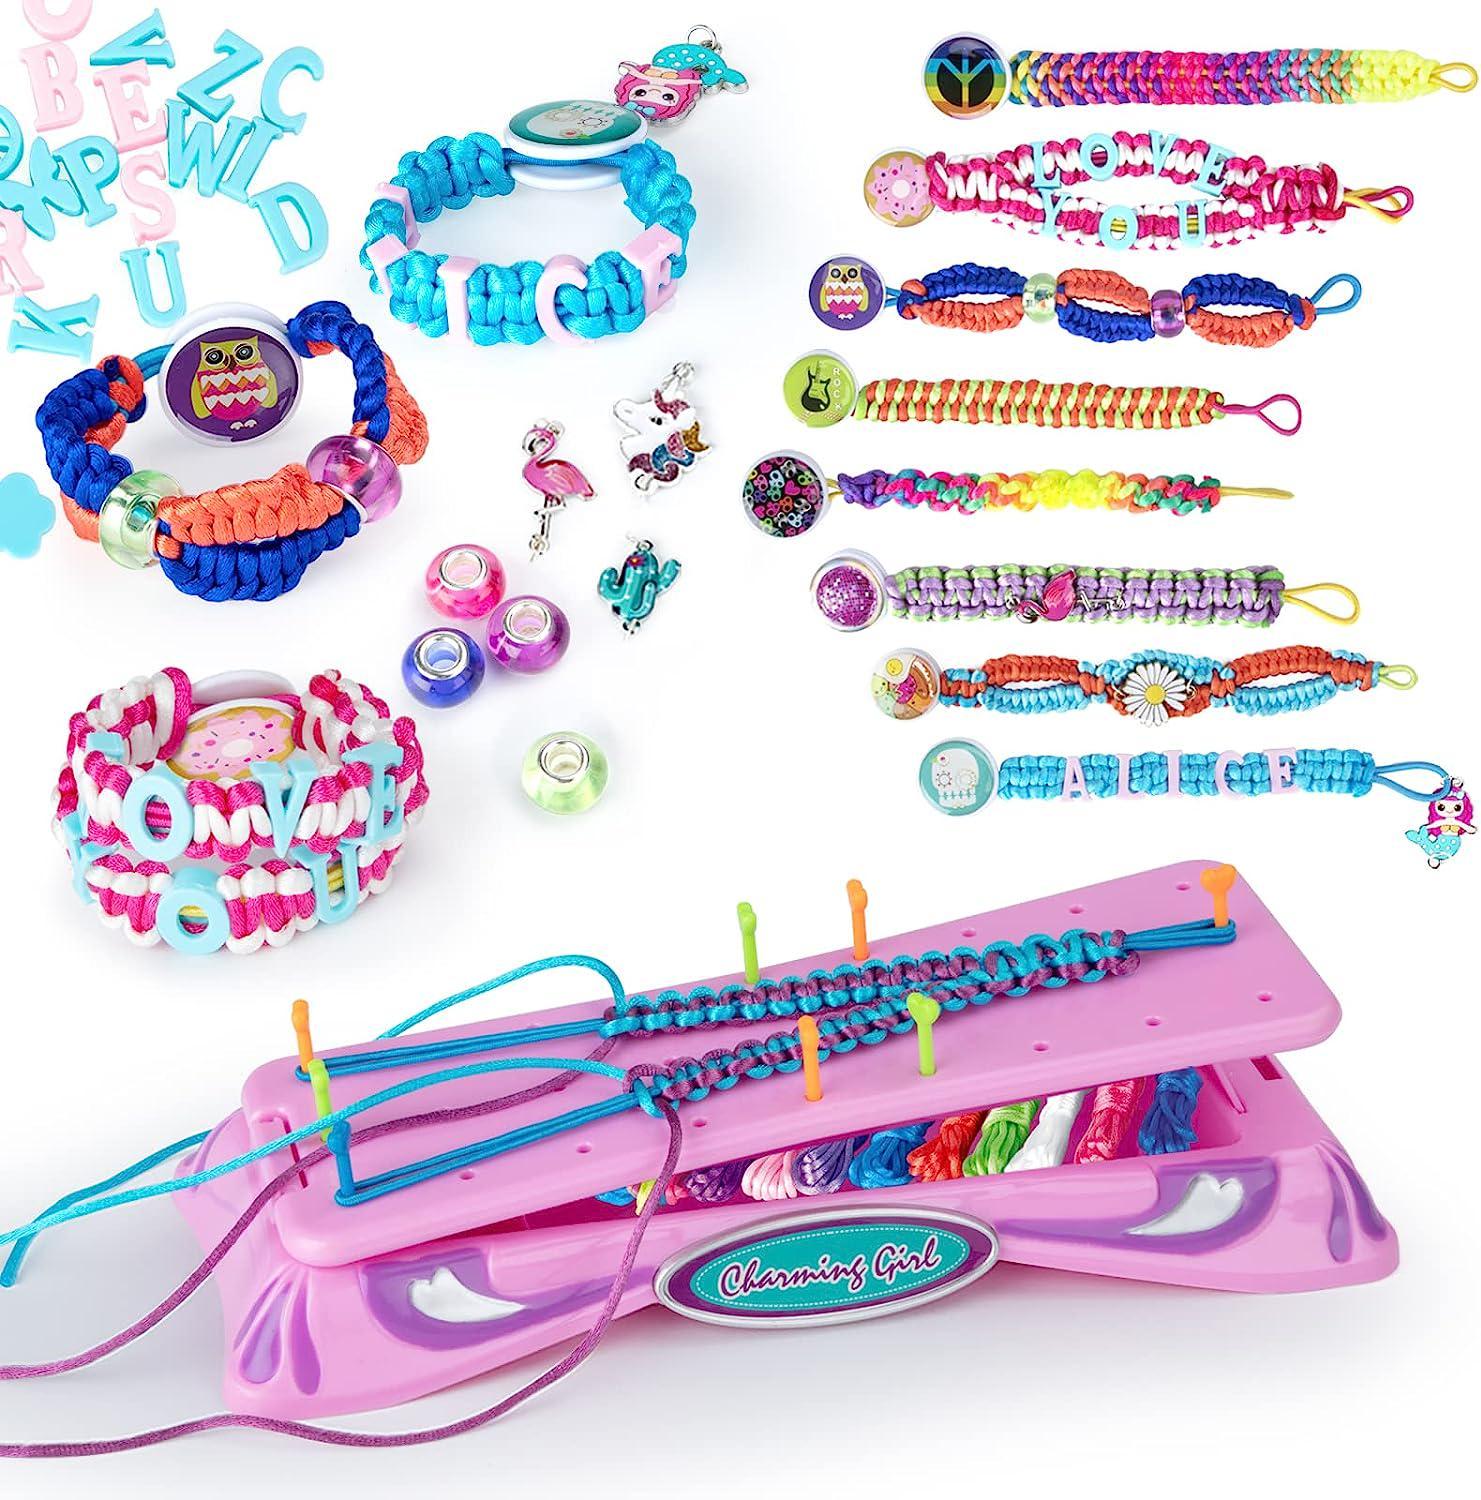 Coplus Friendship Bracelet Making Kit for and 50 similar items